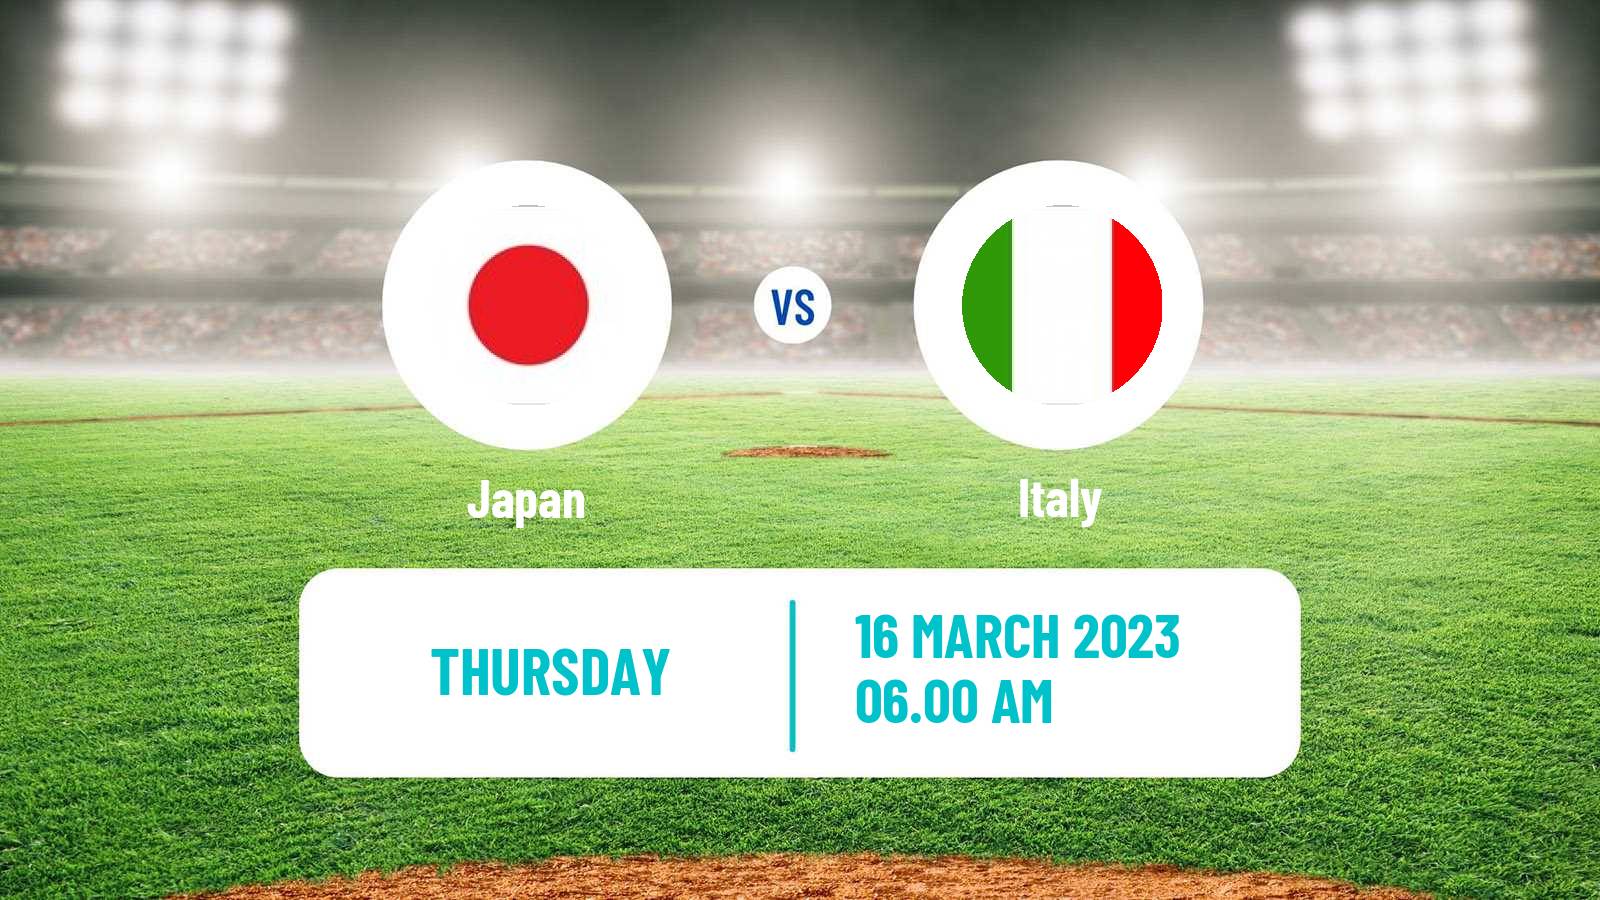 Baseball World Baseball Classic Japan - Italy